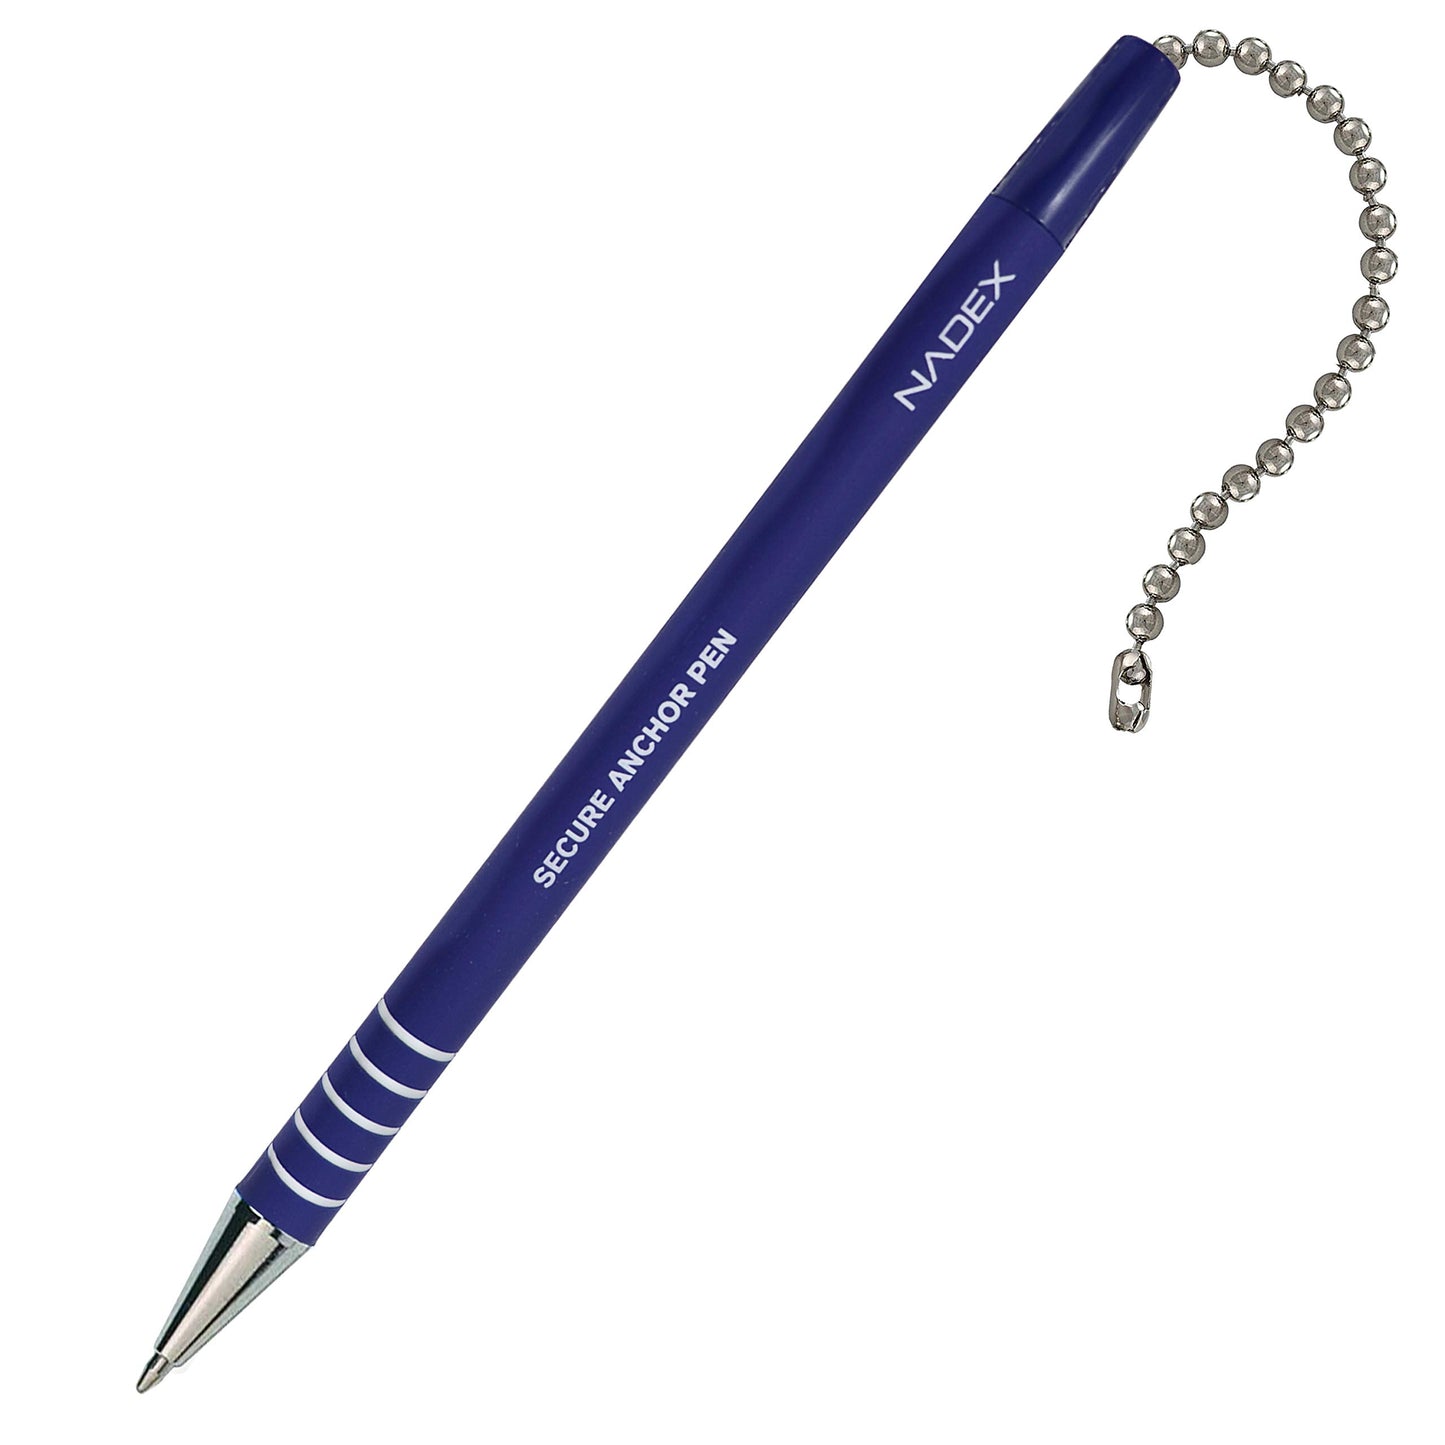 Security Chain Security Pen, 4 Pens, 1 Base, 5 refills, blue